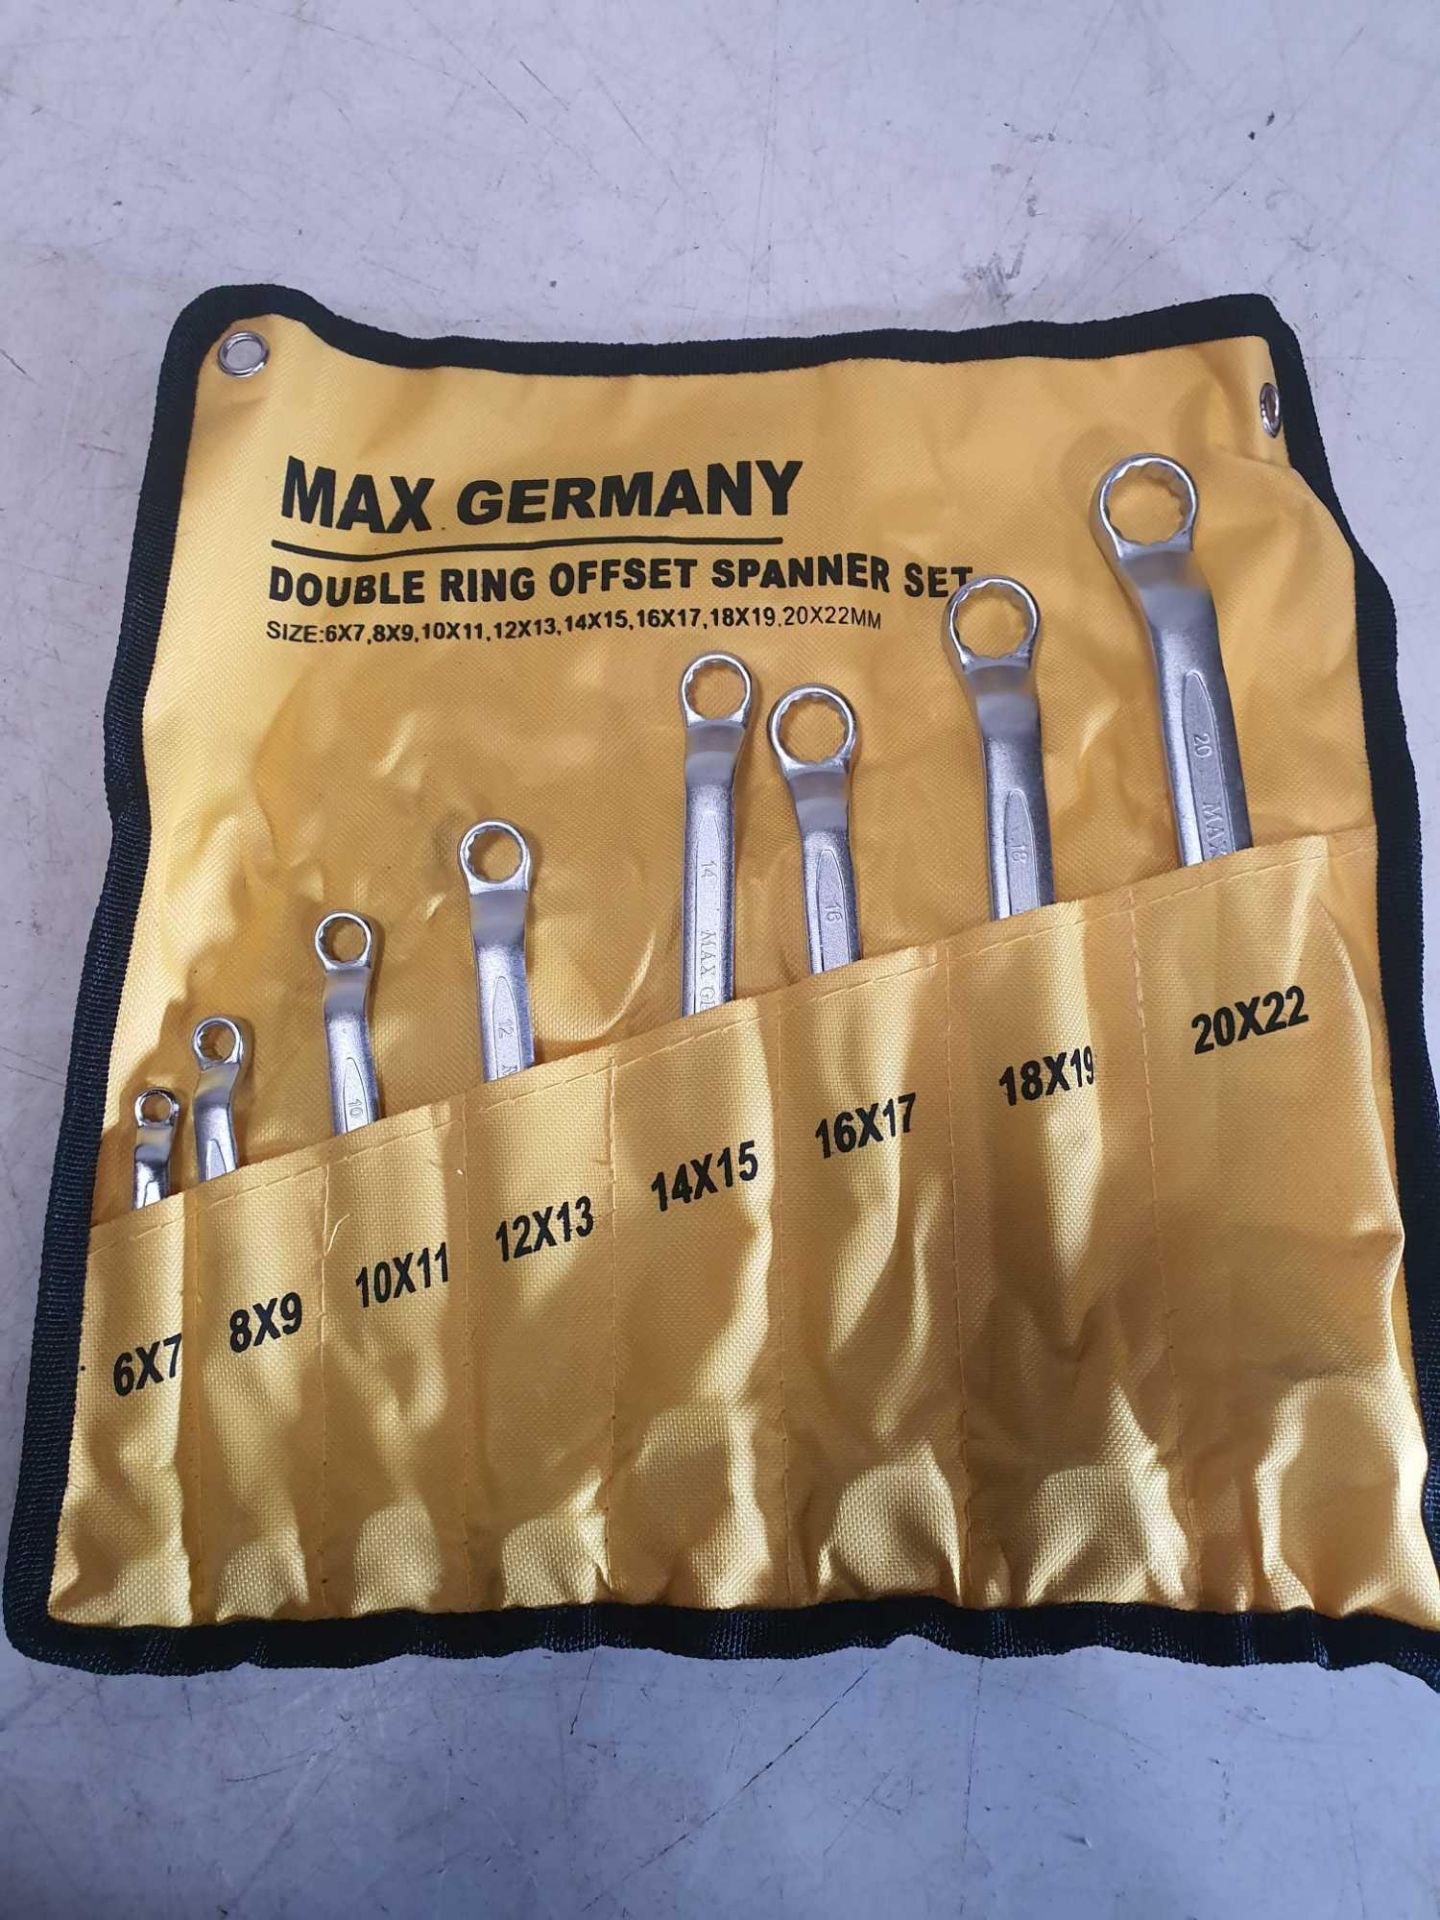 Max germany doible ring spanner set